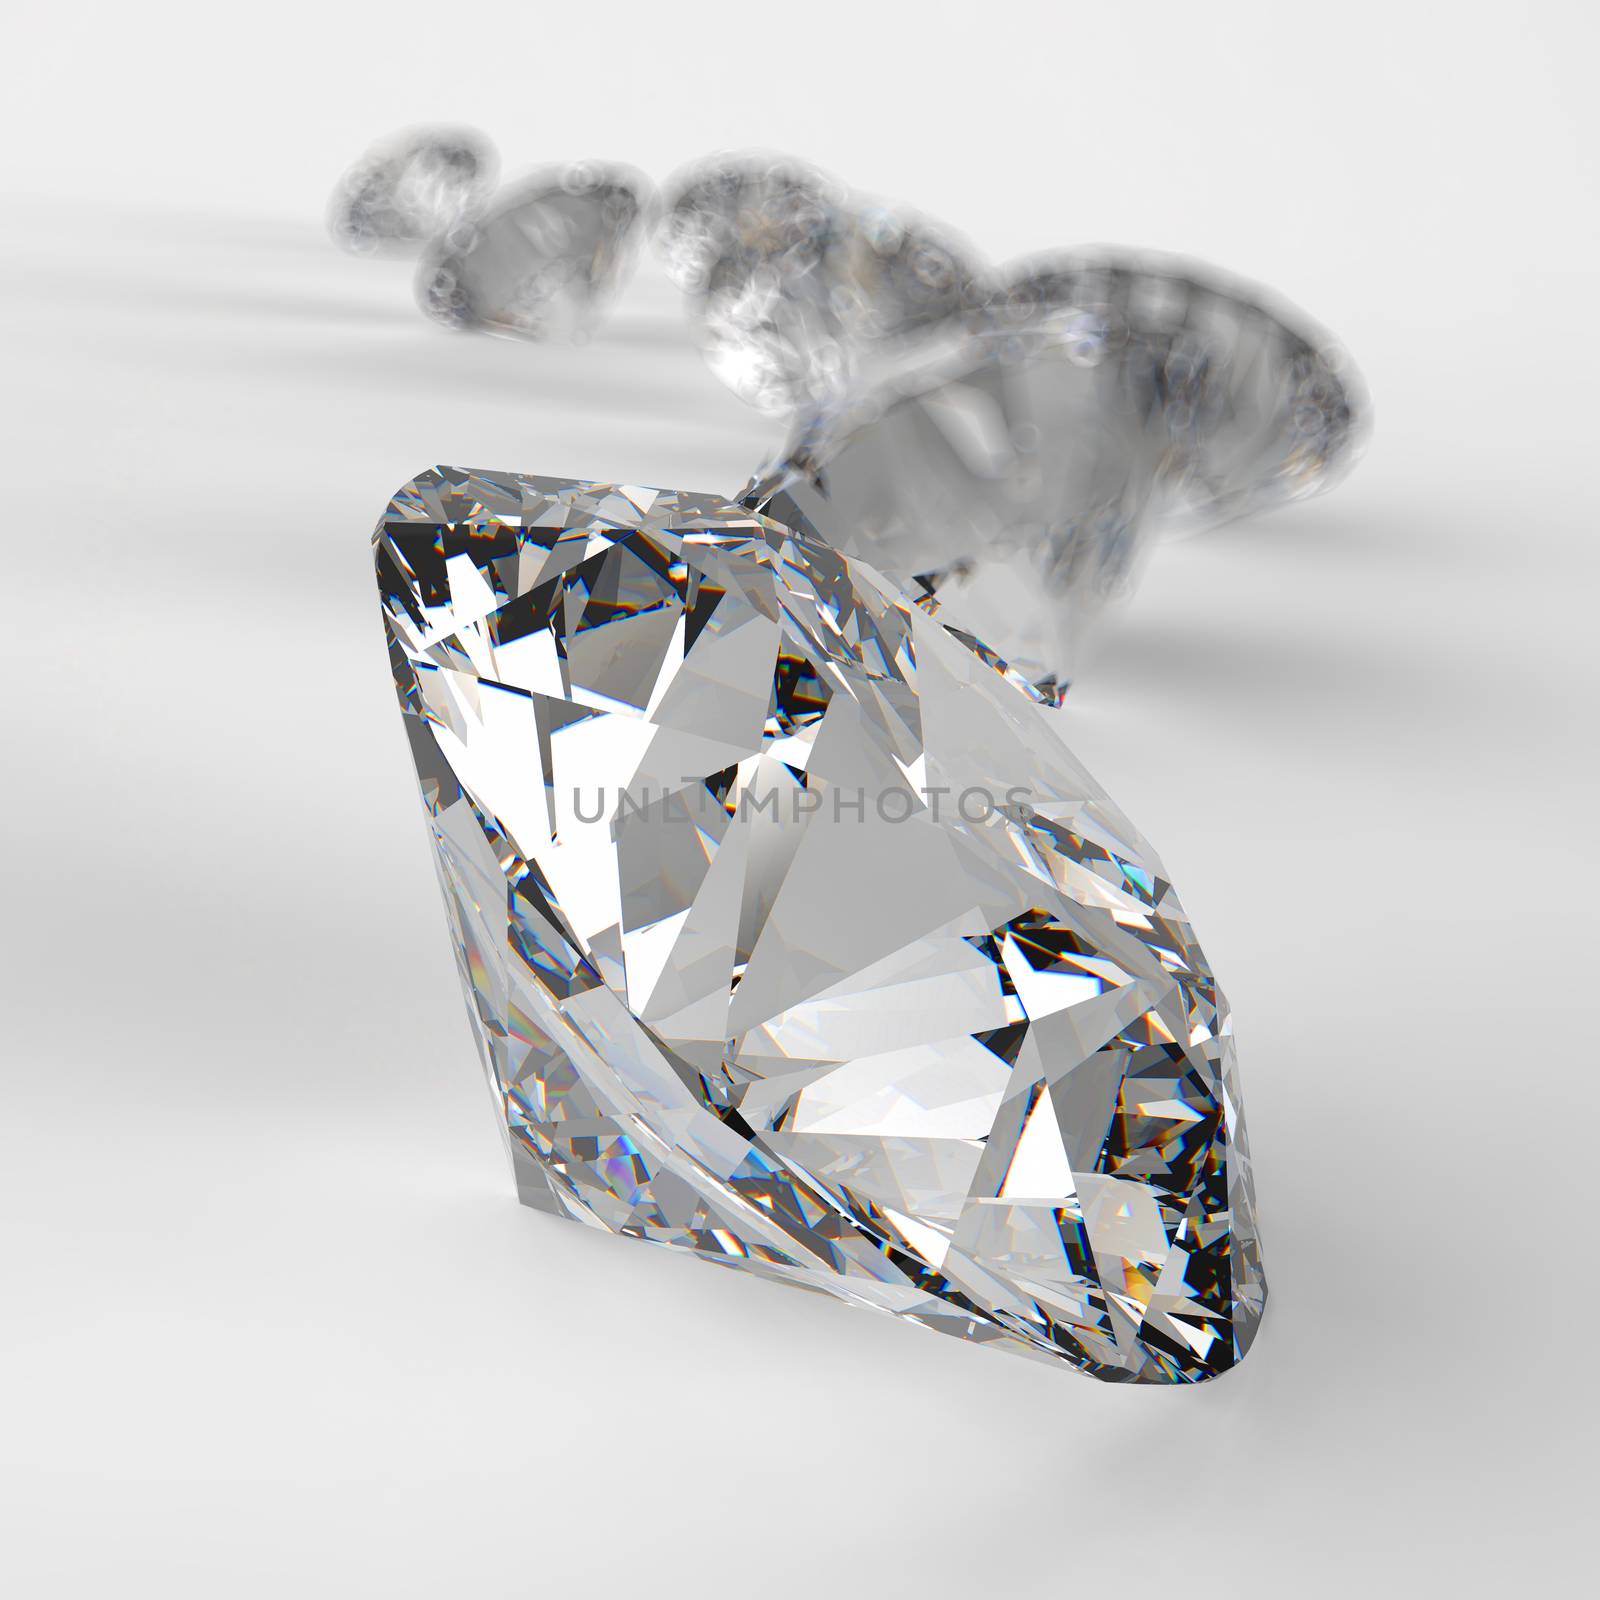 Diamonds isolated on white 3d model